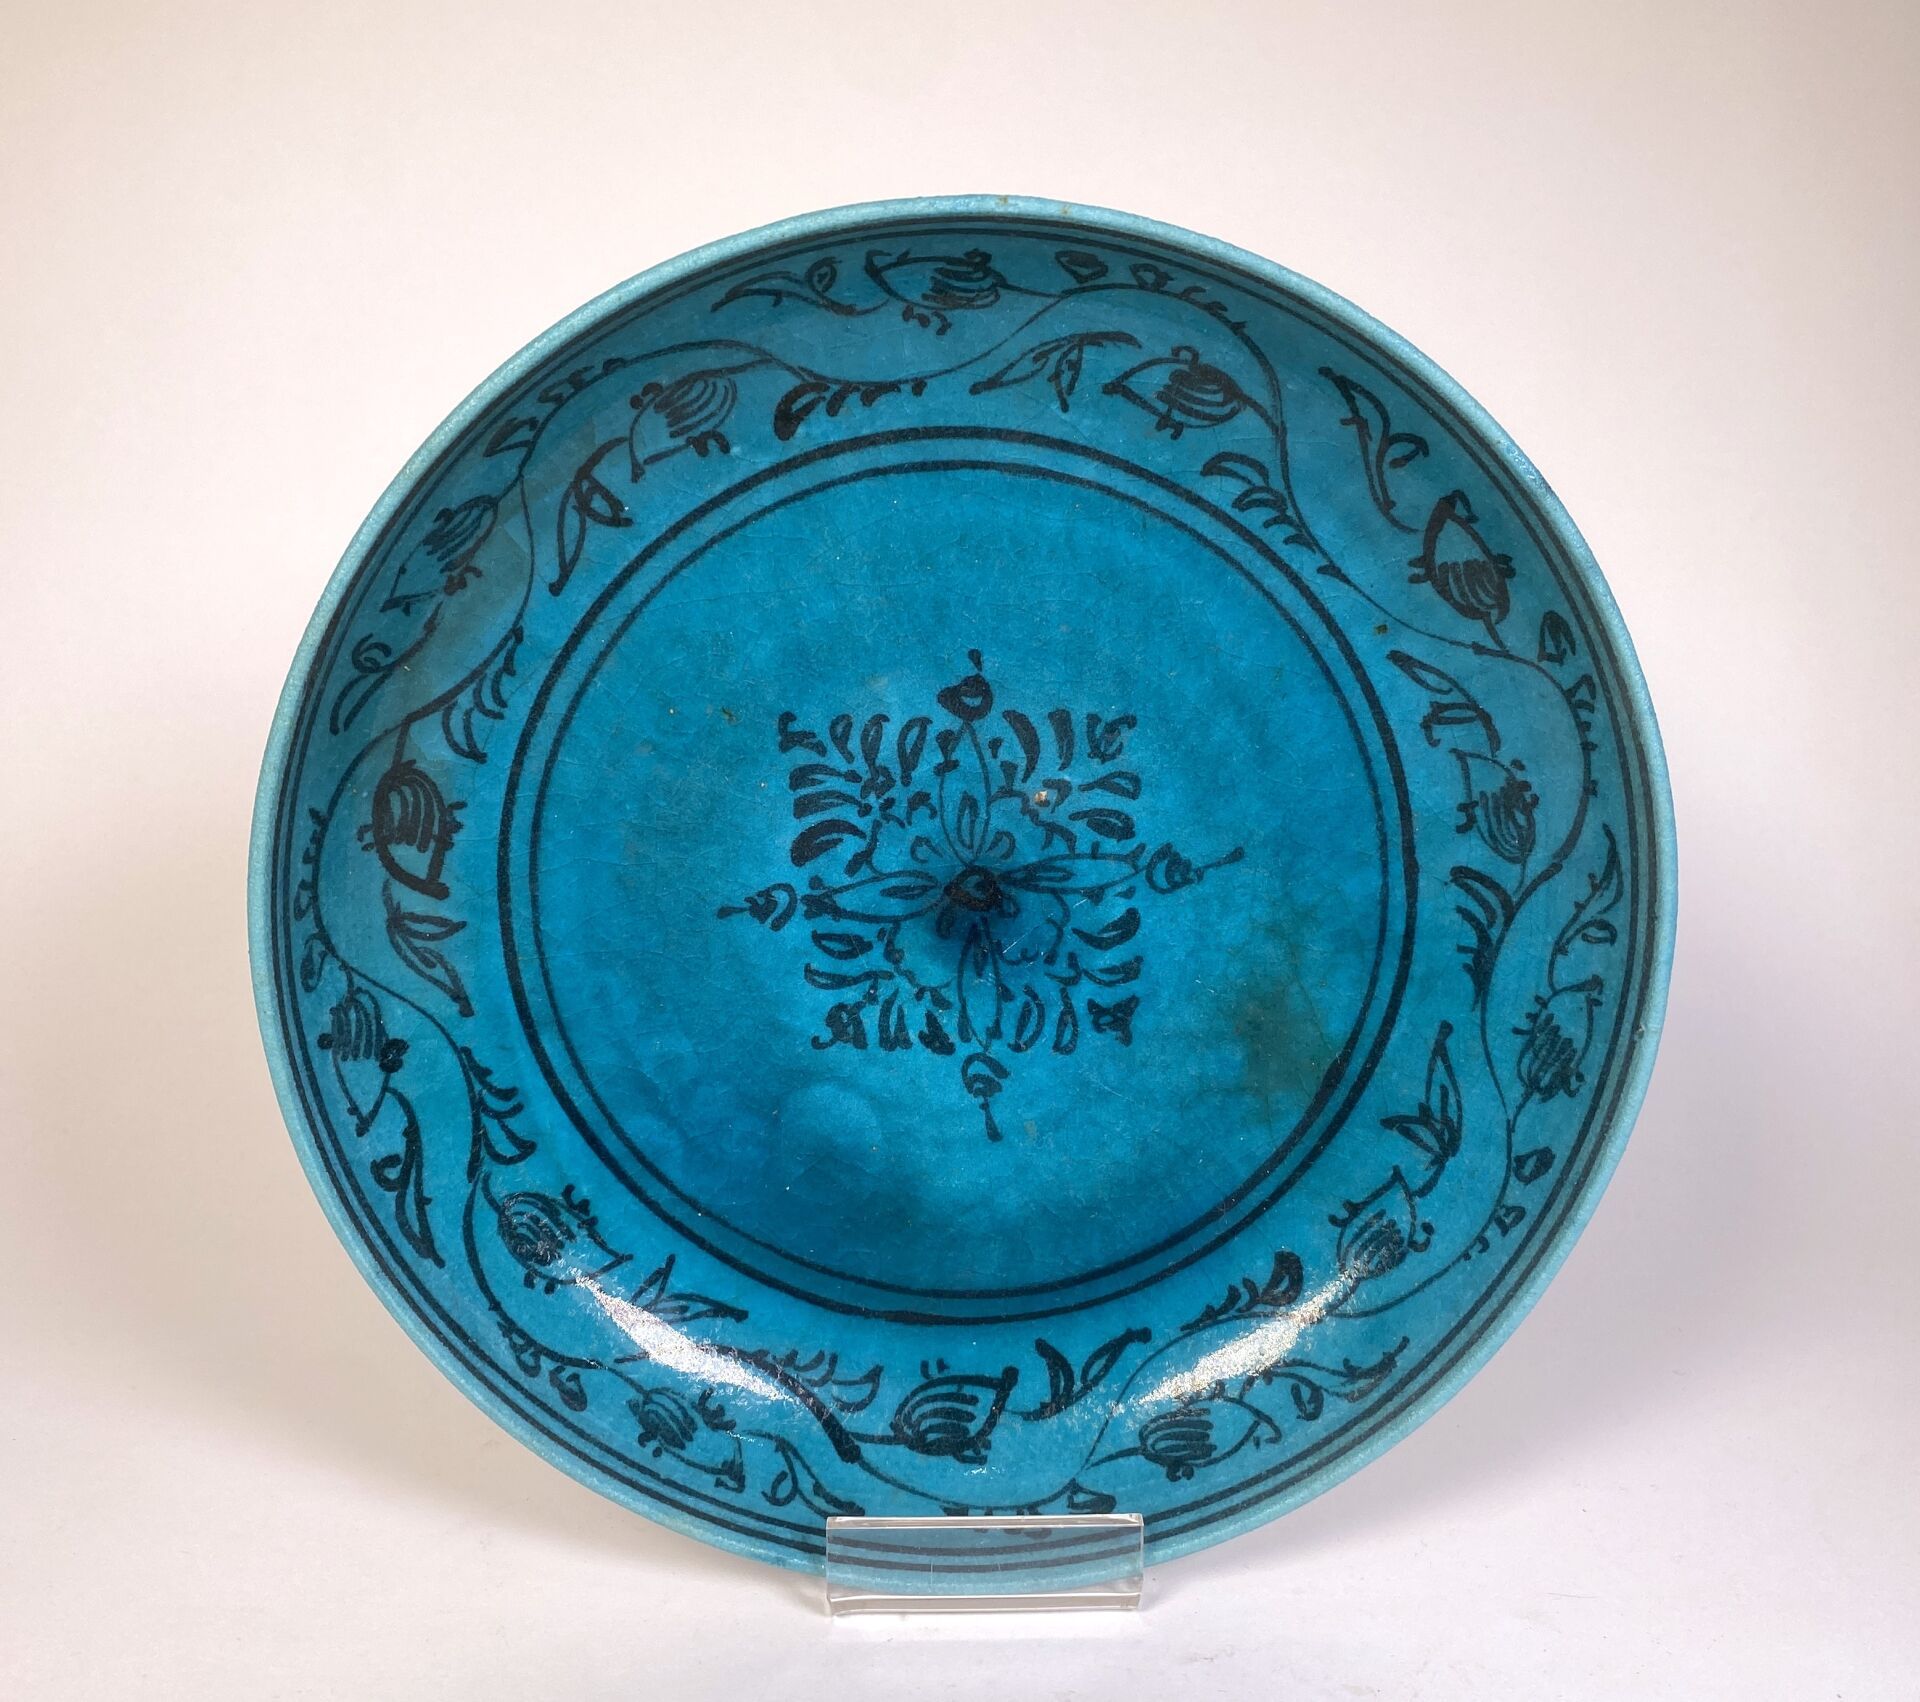 Null 蓝釉坎德亚盘

伊朗，20 世纪初。

尺寸：6（高）x 23（深）厘米 
注意：拍品将于 4 月 30 日从我们位于圣旺的仓库提取。